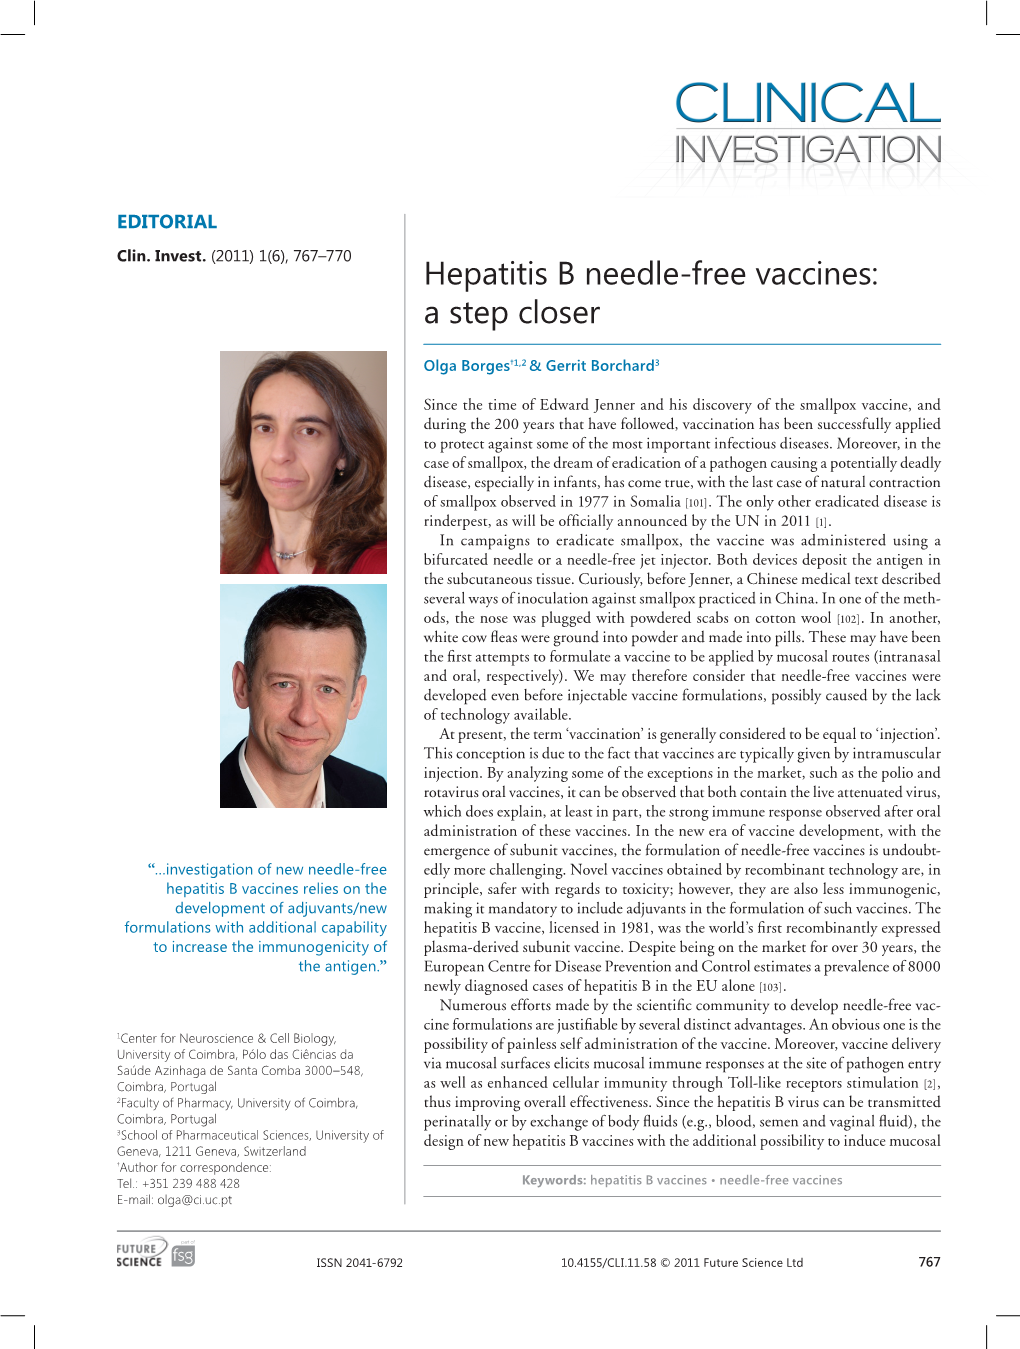 Hepatitis B Needle-Free Vaccines: a Step Closer